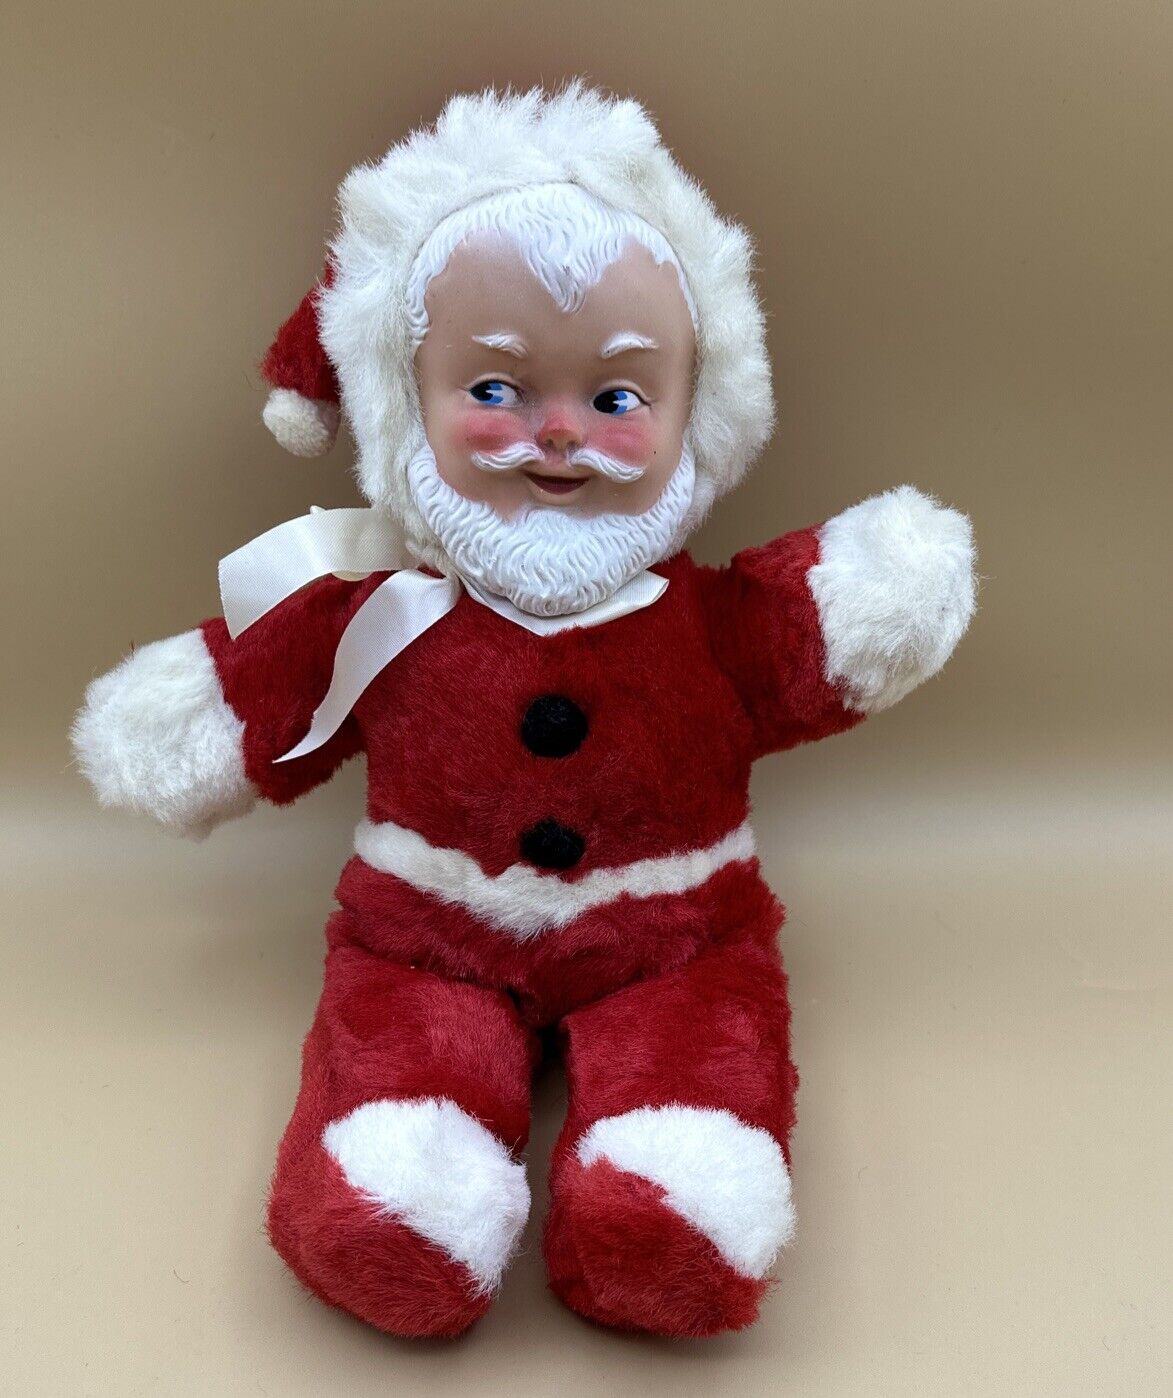 Vintage Rushton Rubber Face Santa Claus Doll Christmas Decoration 1950s Stuffed